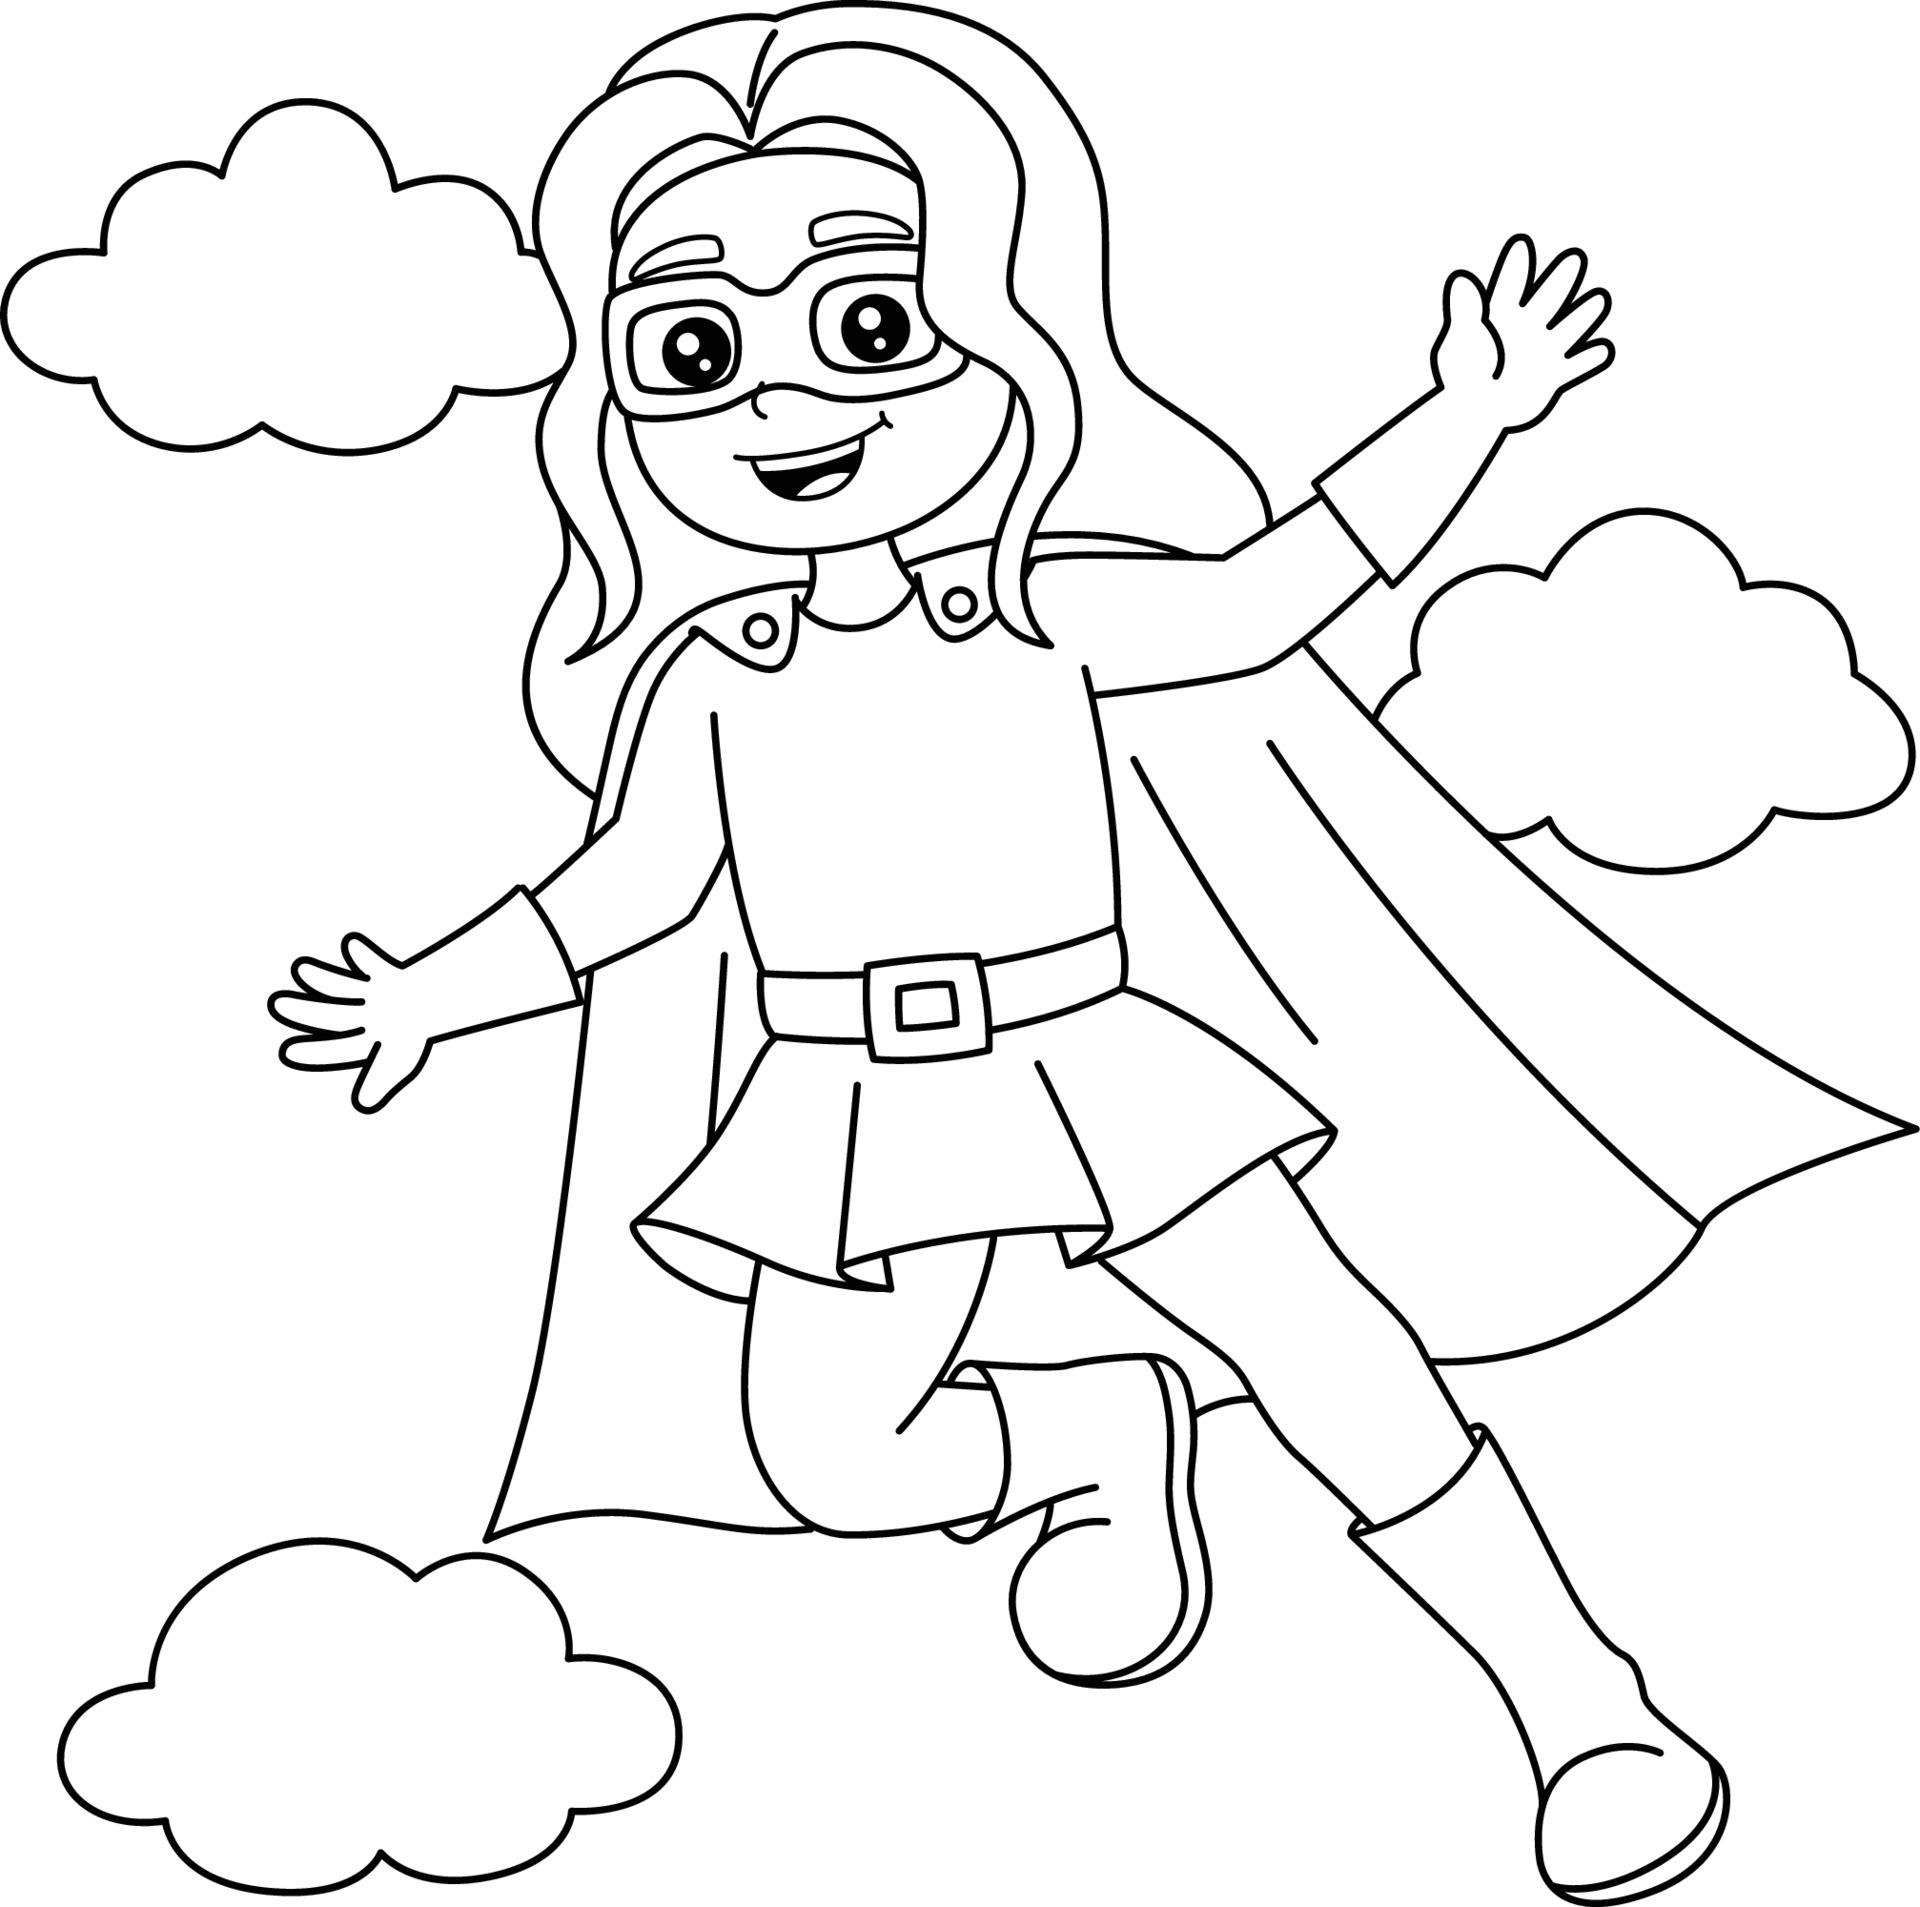 Superhero Girl Sketch by BLIX007 on DeviantArt